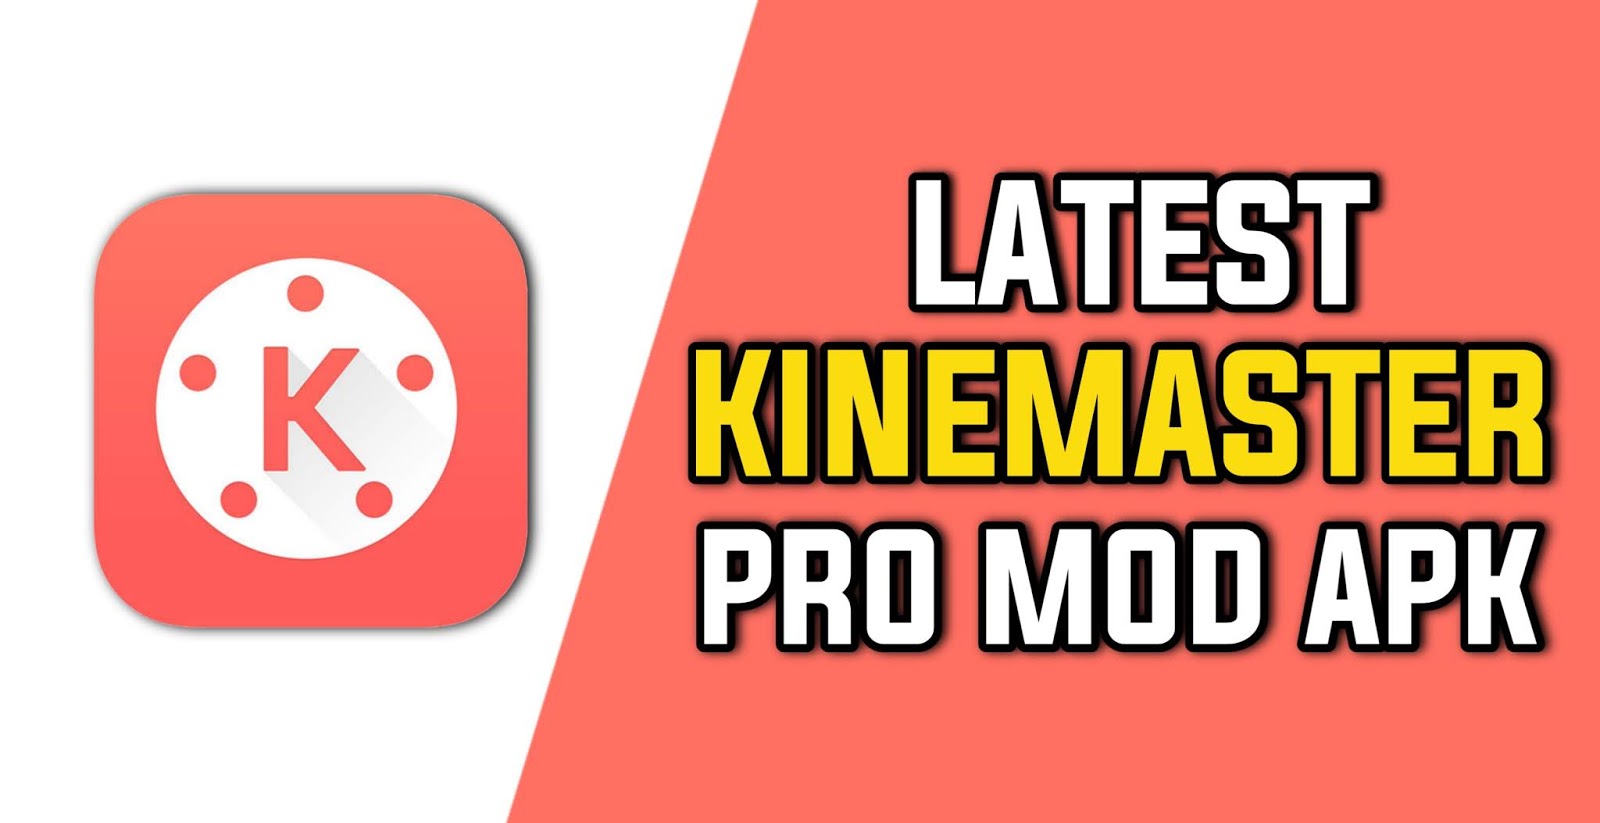 kinemaster pro apk no watermark latest version